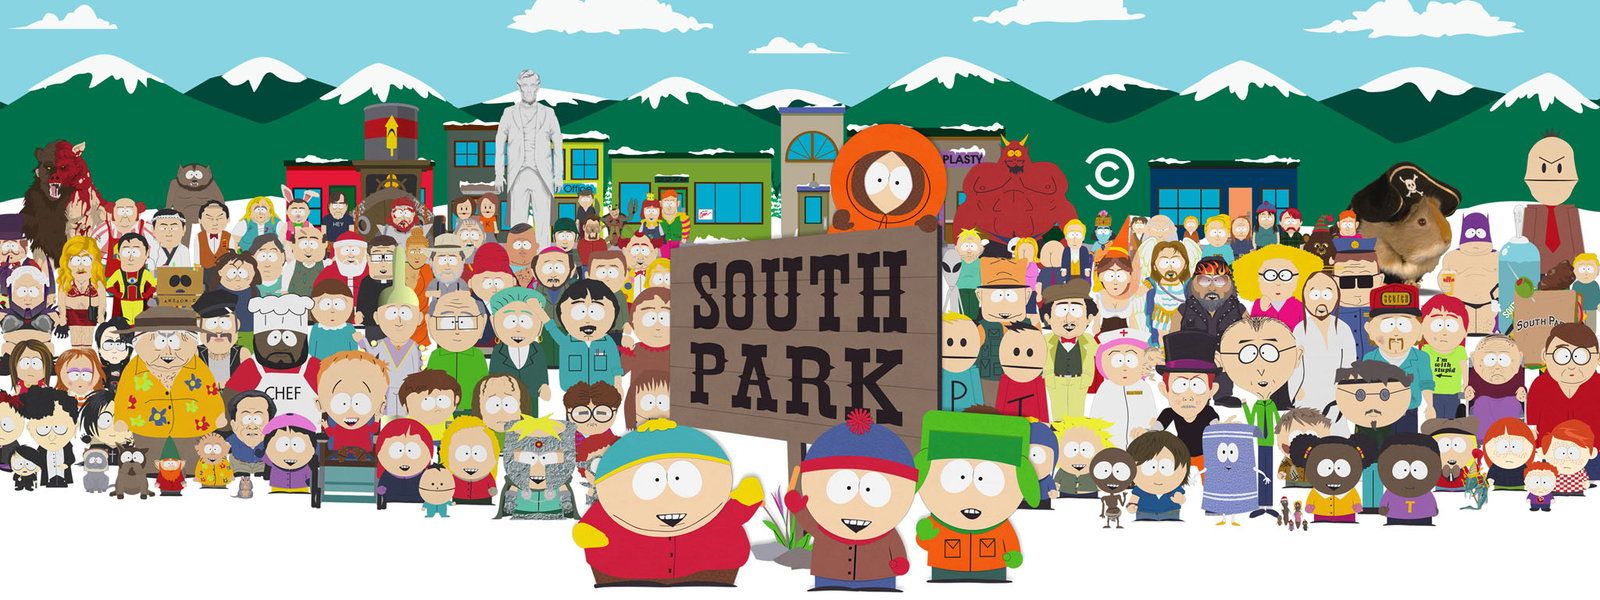 south park episode 201 online uncesored